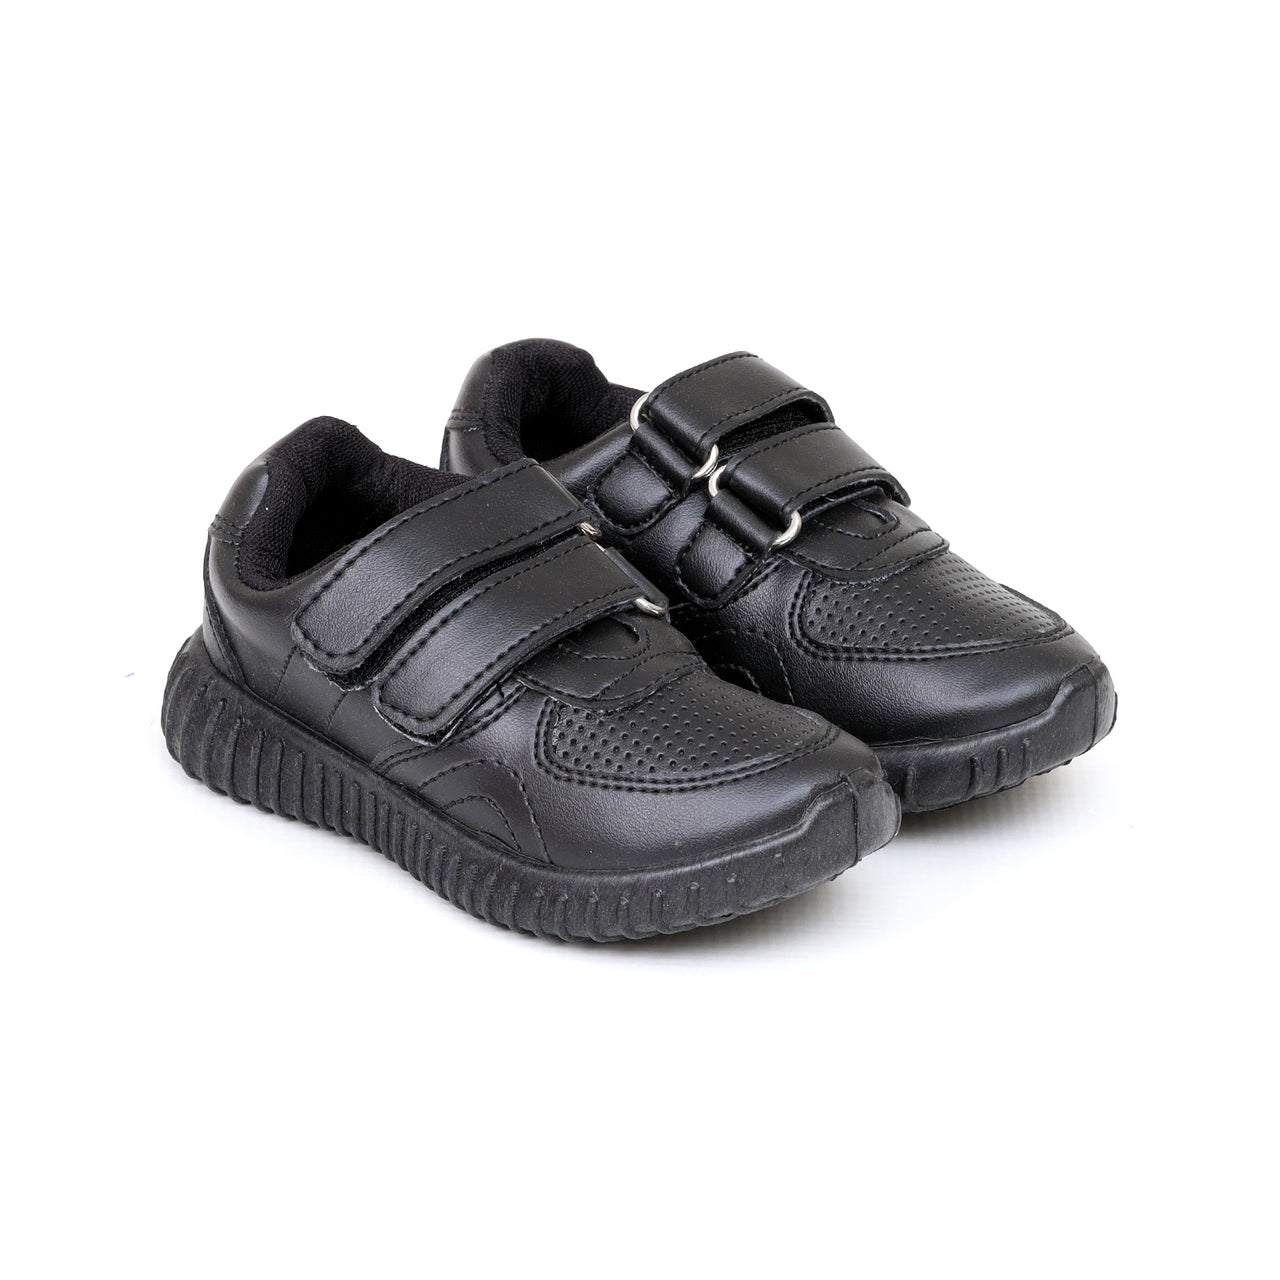 B-CH-0200035- School Shoes